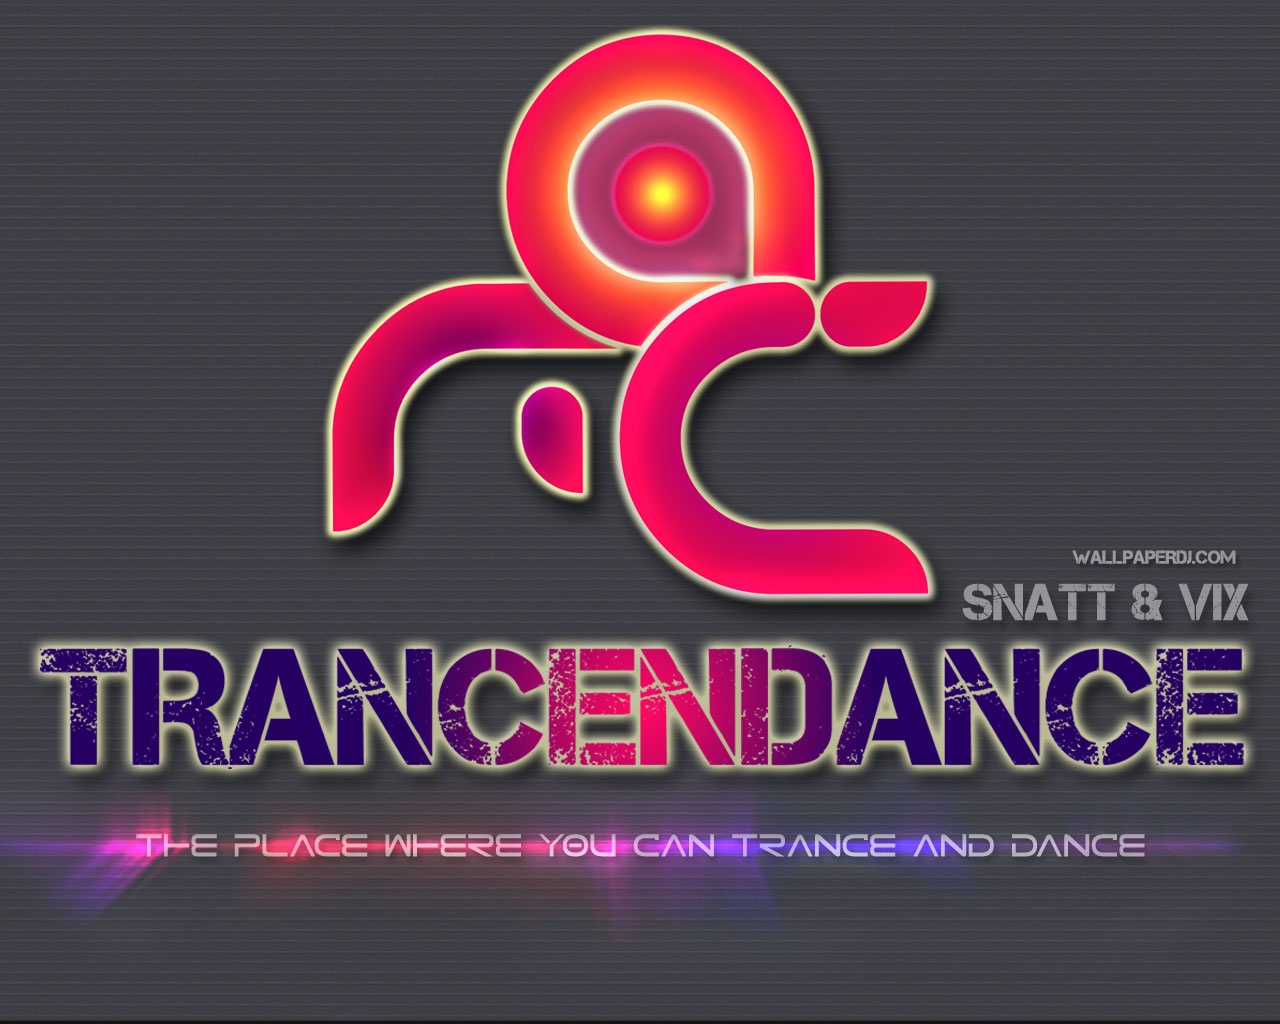 TrancENDance w/ Snatt & Vix HD and Wide Wallpapers